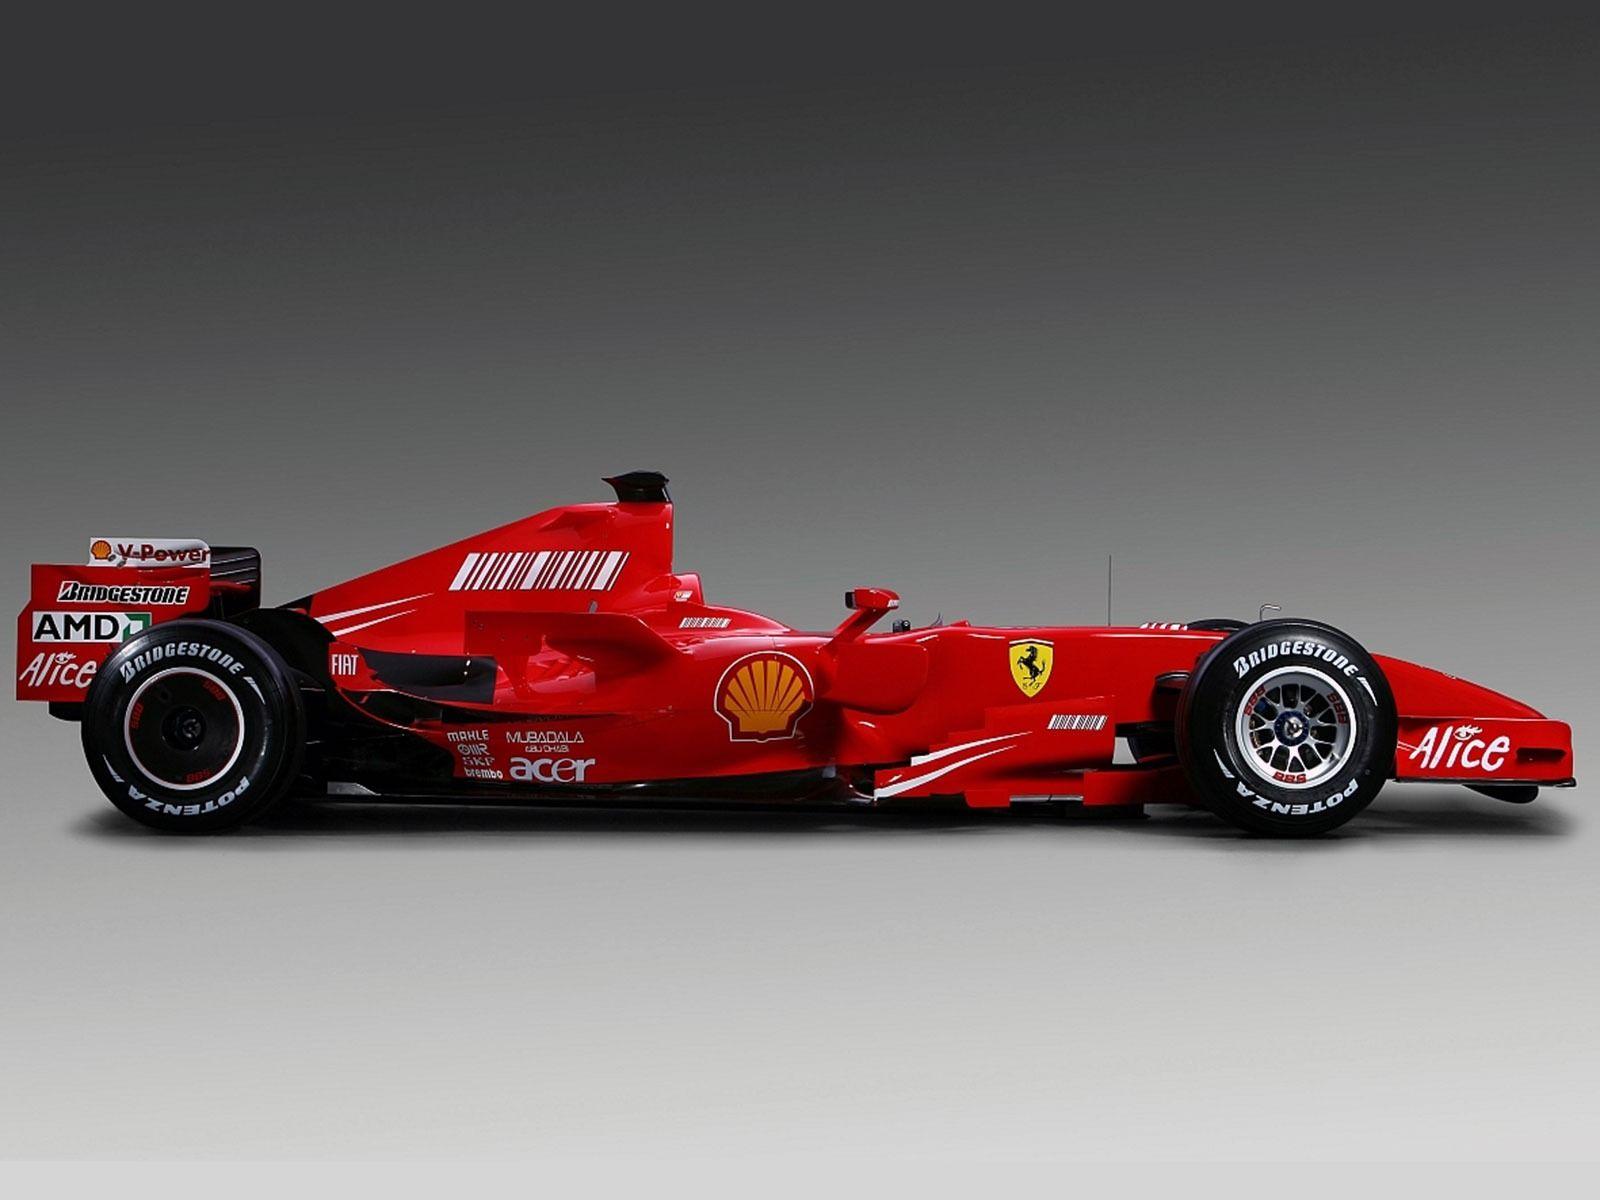 F1 Ferrari Wallpaper Formula 1 Cars Wallpaper in jpg format